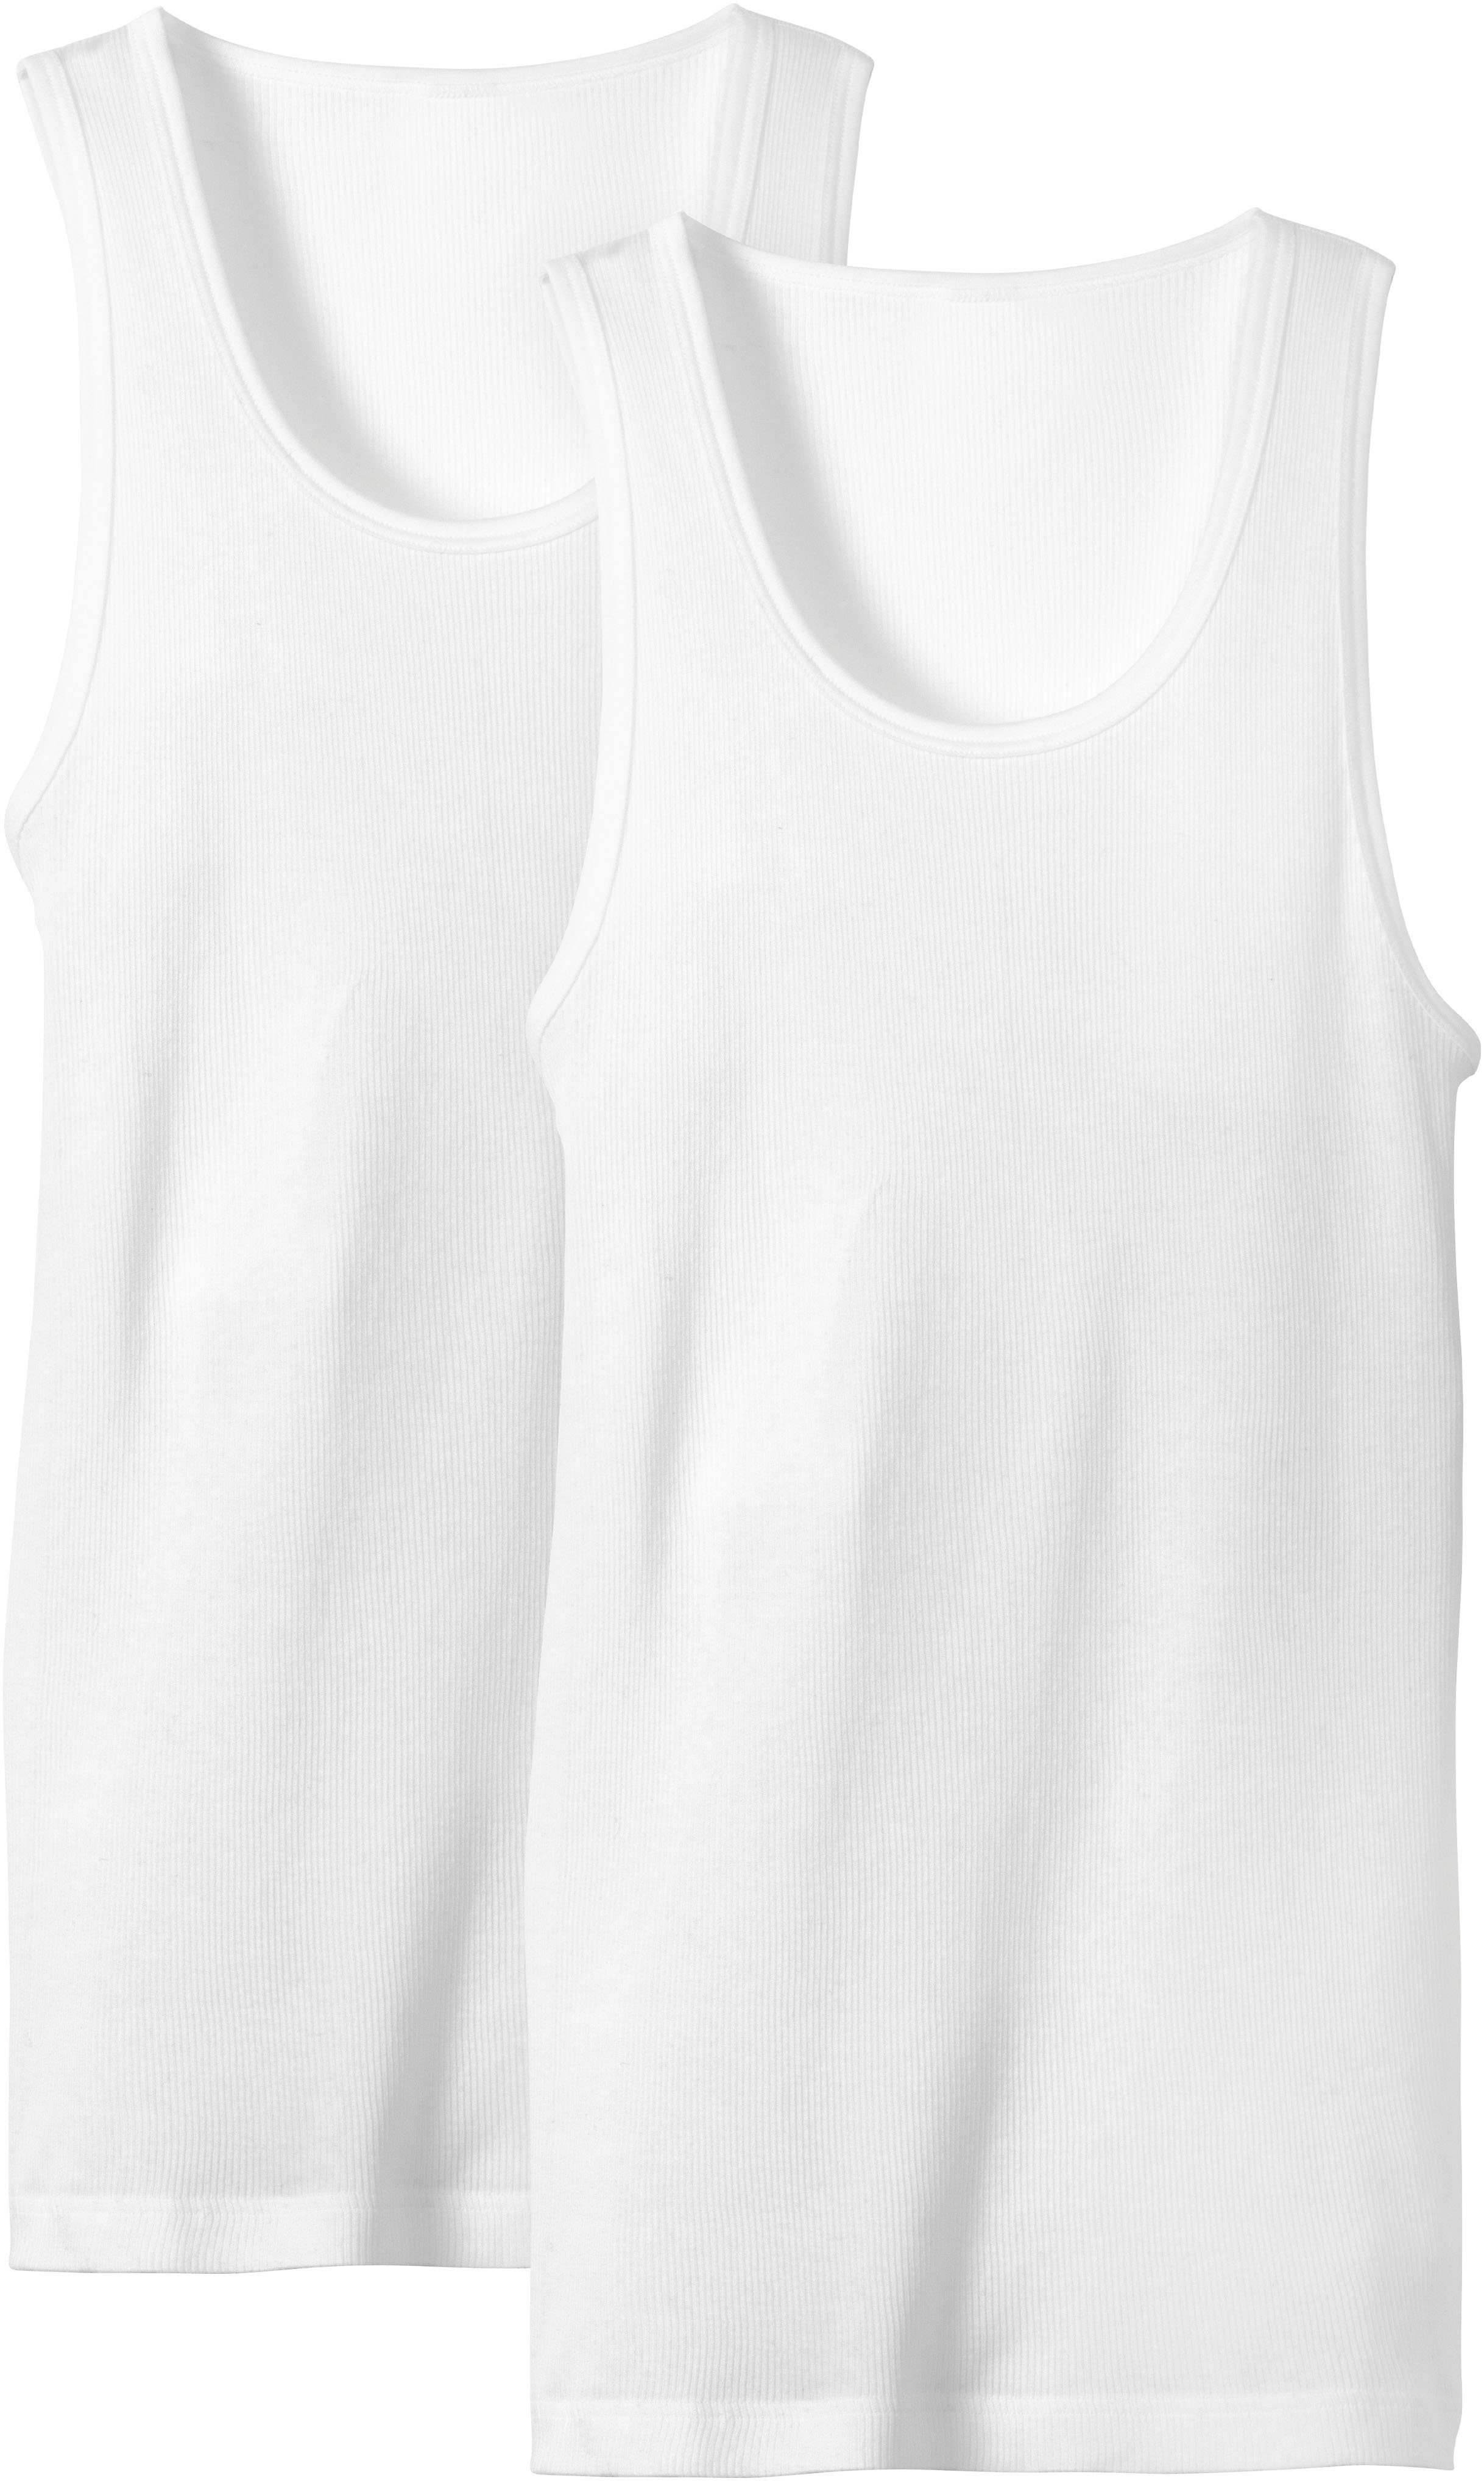 CALIDA Unterhemd Natural Benefit (Packung, 2-St) Athletic-Shirt,  körperbetonter Schnitt im 2er Pack, Glatt verarbeitete Single  Jersey-Baumwolle